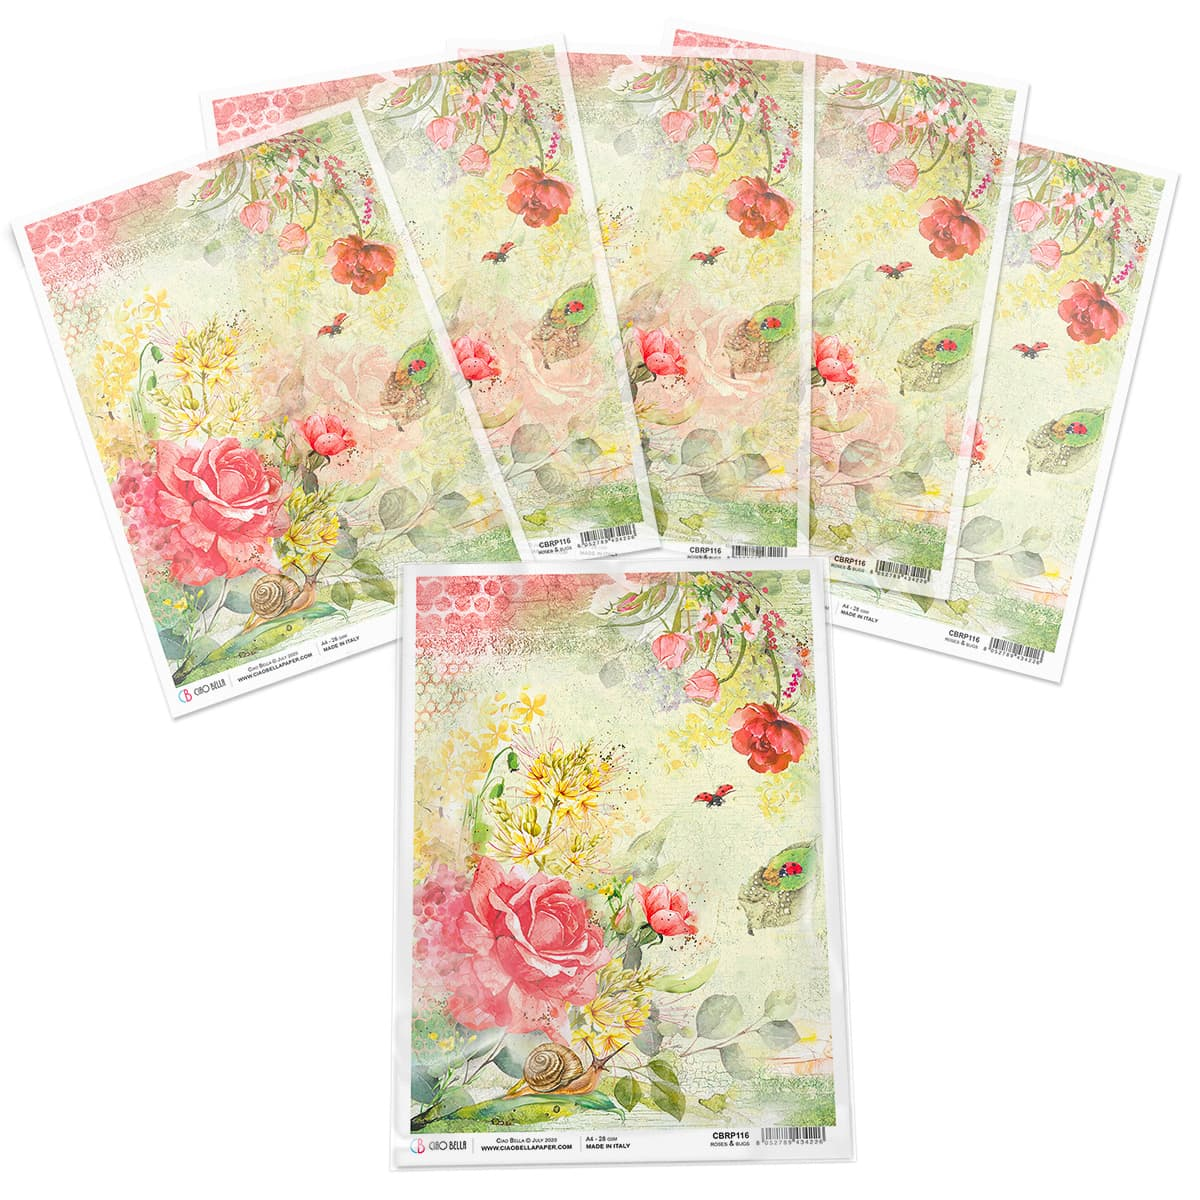 Piuma A3 Decoupage Paper - Roses & Bugs - CBRM012